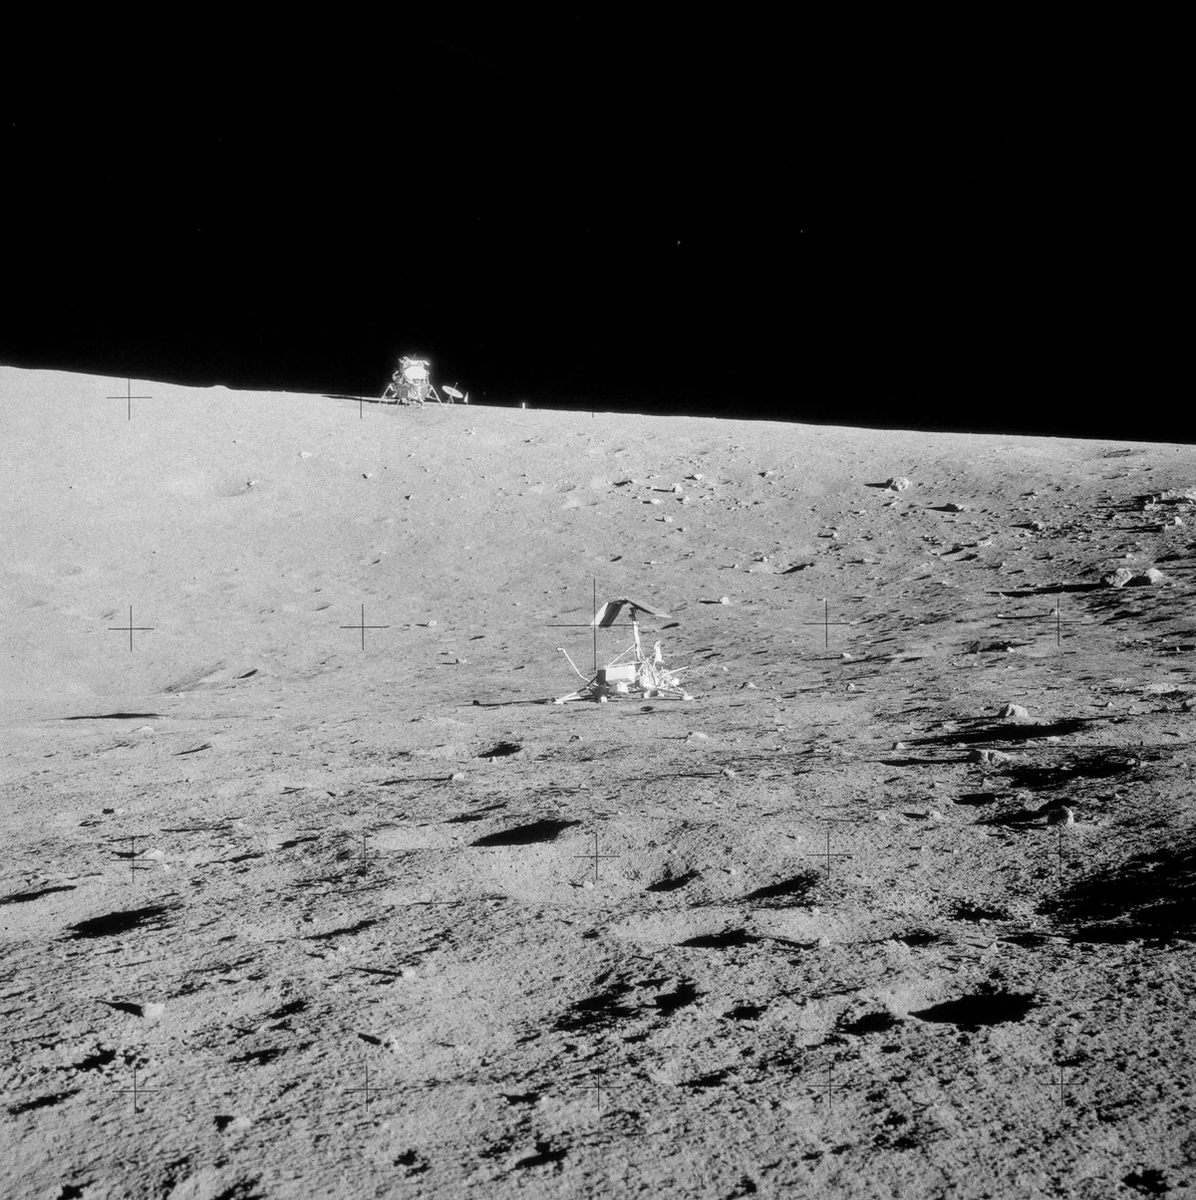 Surveyor 3 Apollo 12. Аполлон 12 на Луне. Фото с миссии Аполлон 12. Снимки Луны миссии Аполлон. Луна 12 апреля